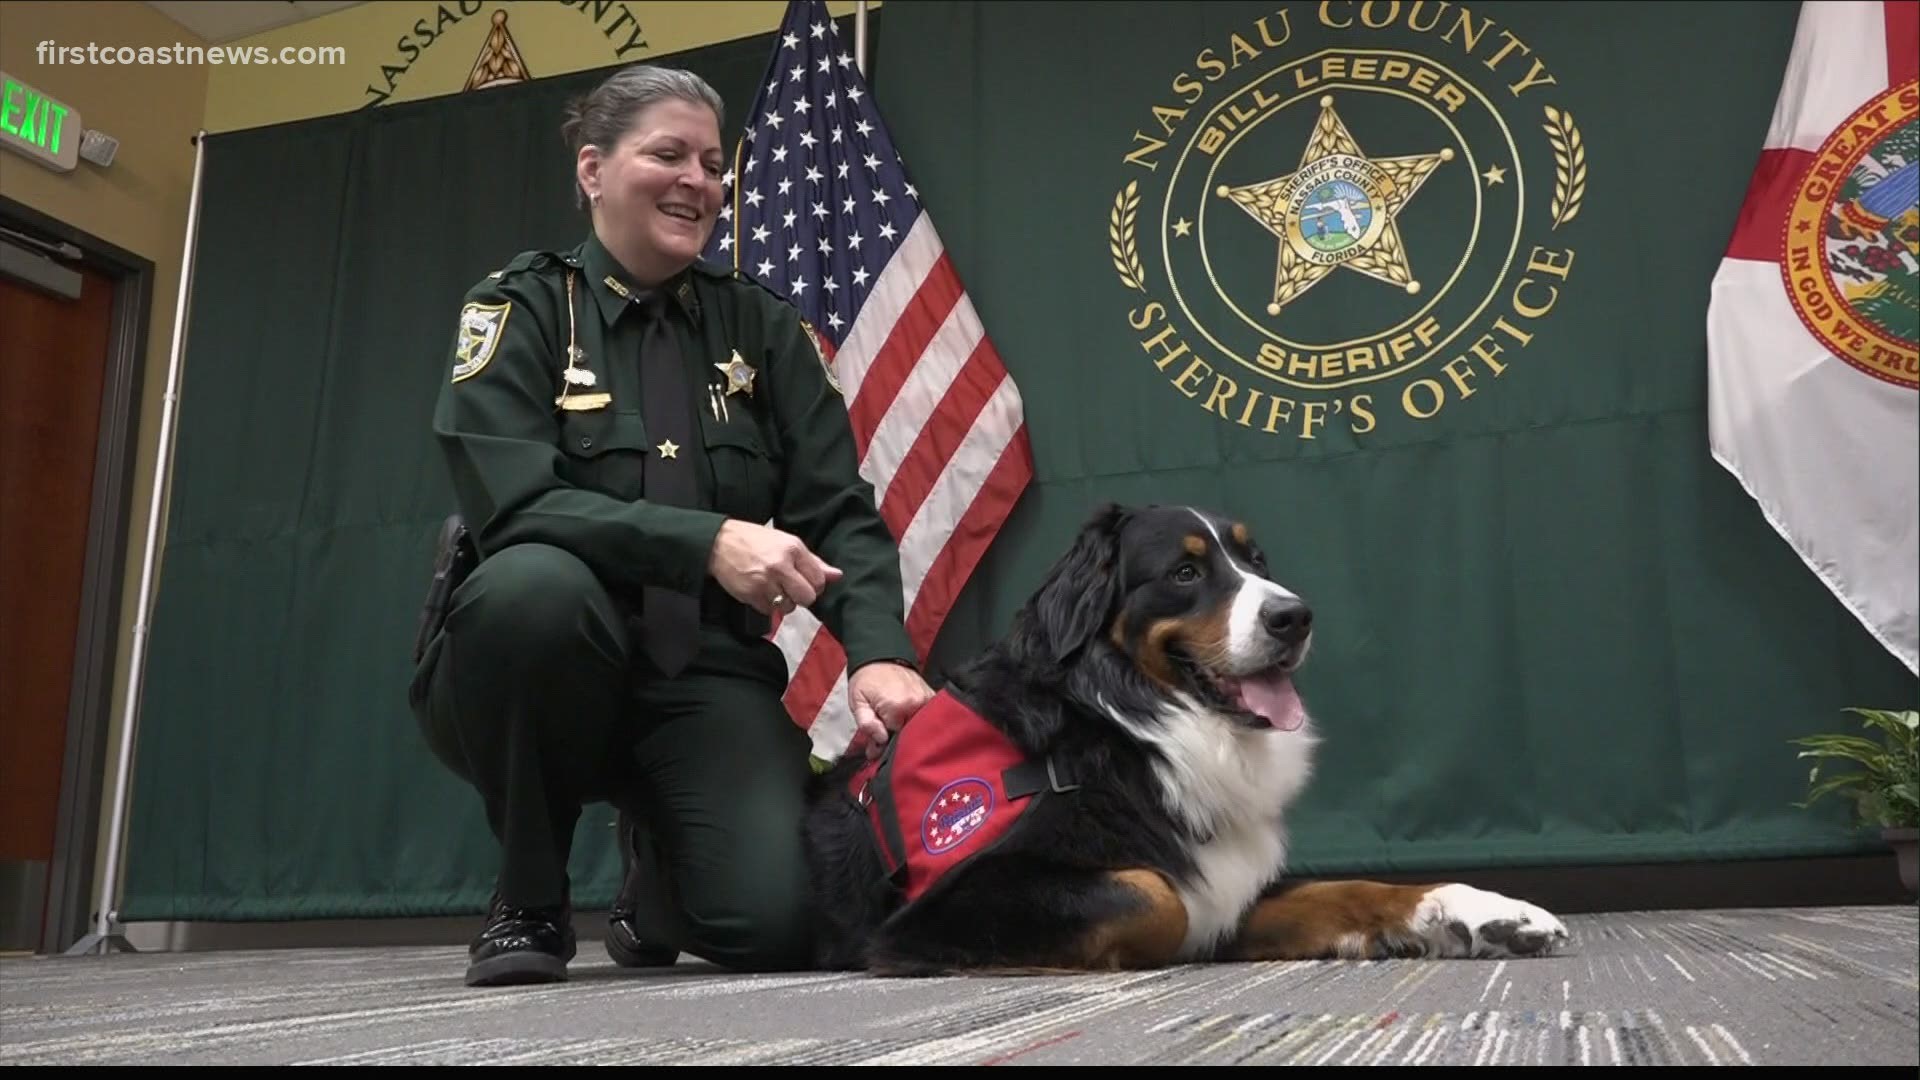 Comfort dog joins Nassau County Sheriff's Office